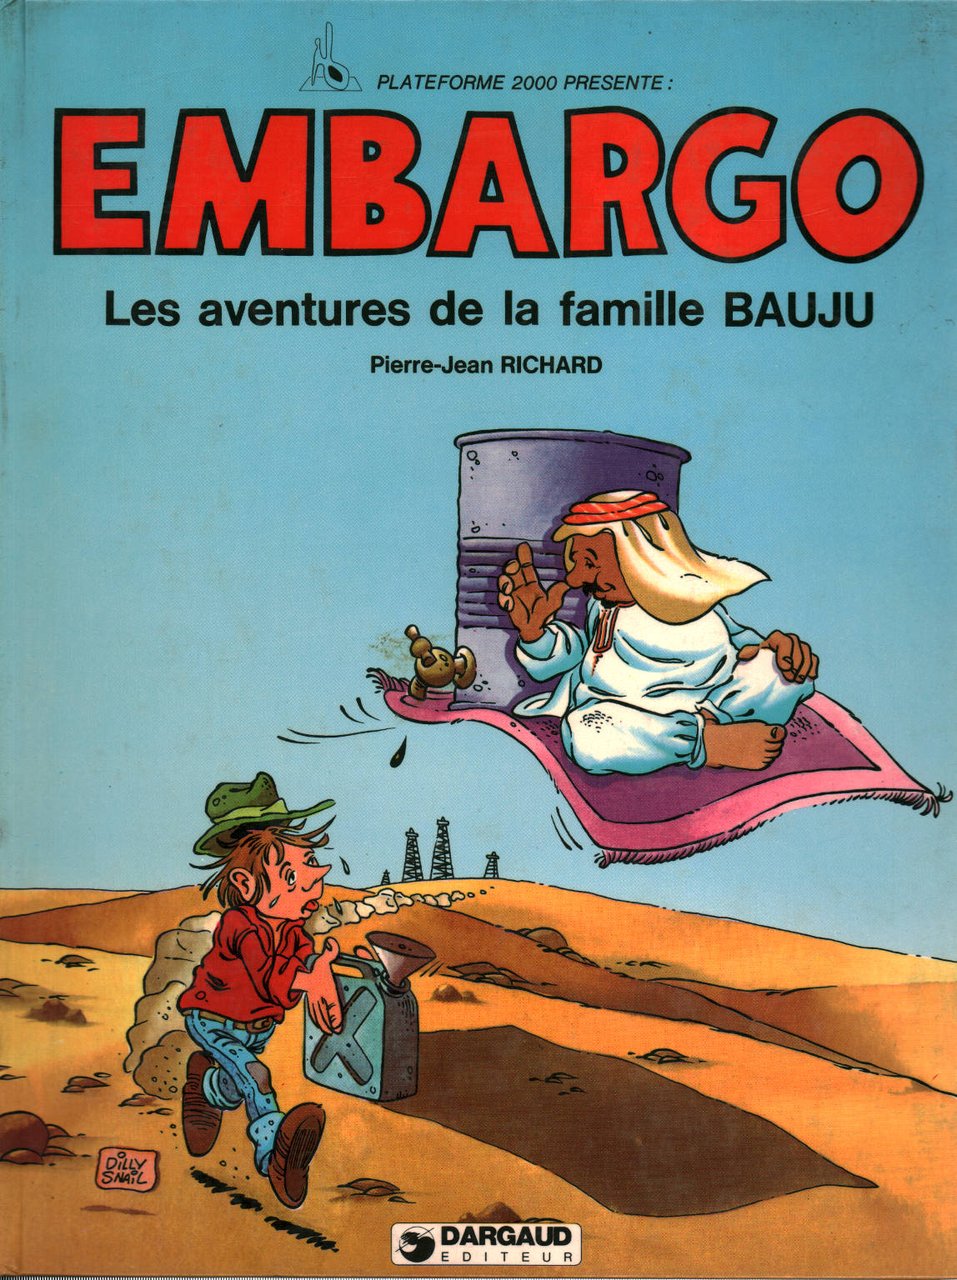 Embargo:Les aventures de la famille BAUJU